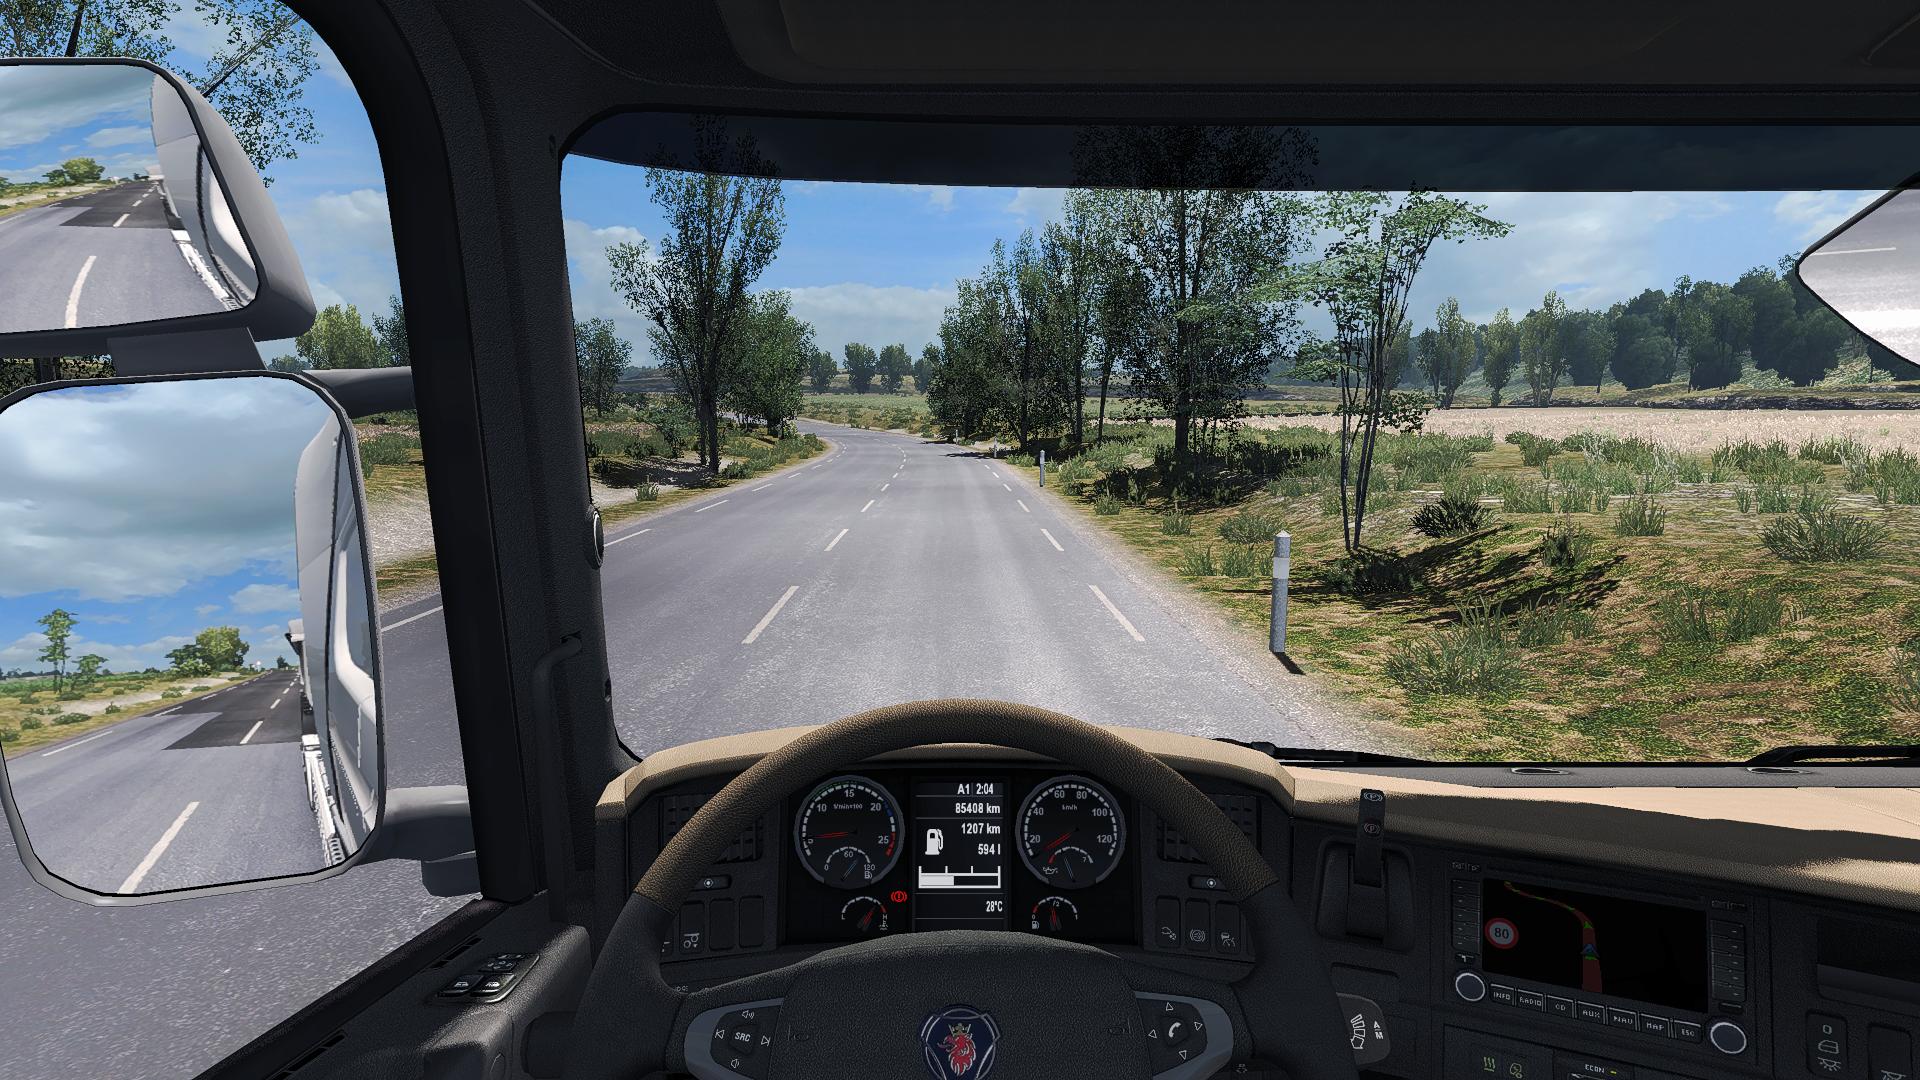 Jbx graphics 3. Realistic етс 2. Euro Truck Simulator Reshade. Етс 2 шейдеры. Драйв симулятор 2.